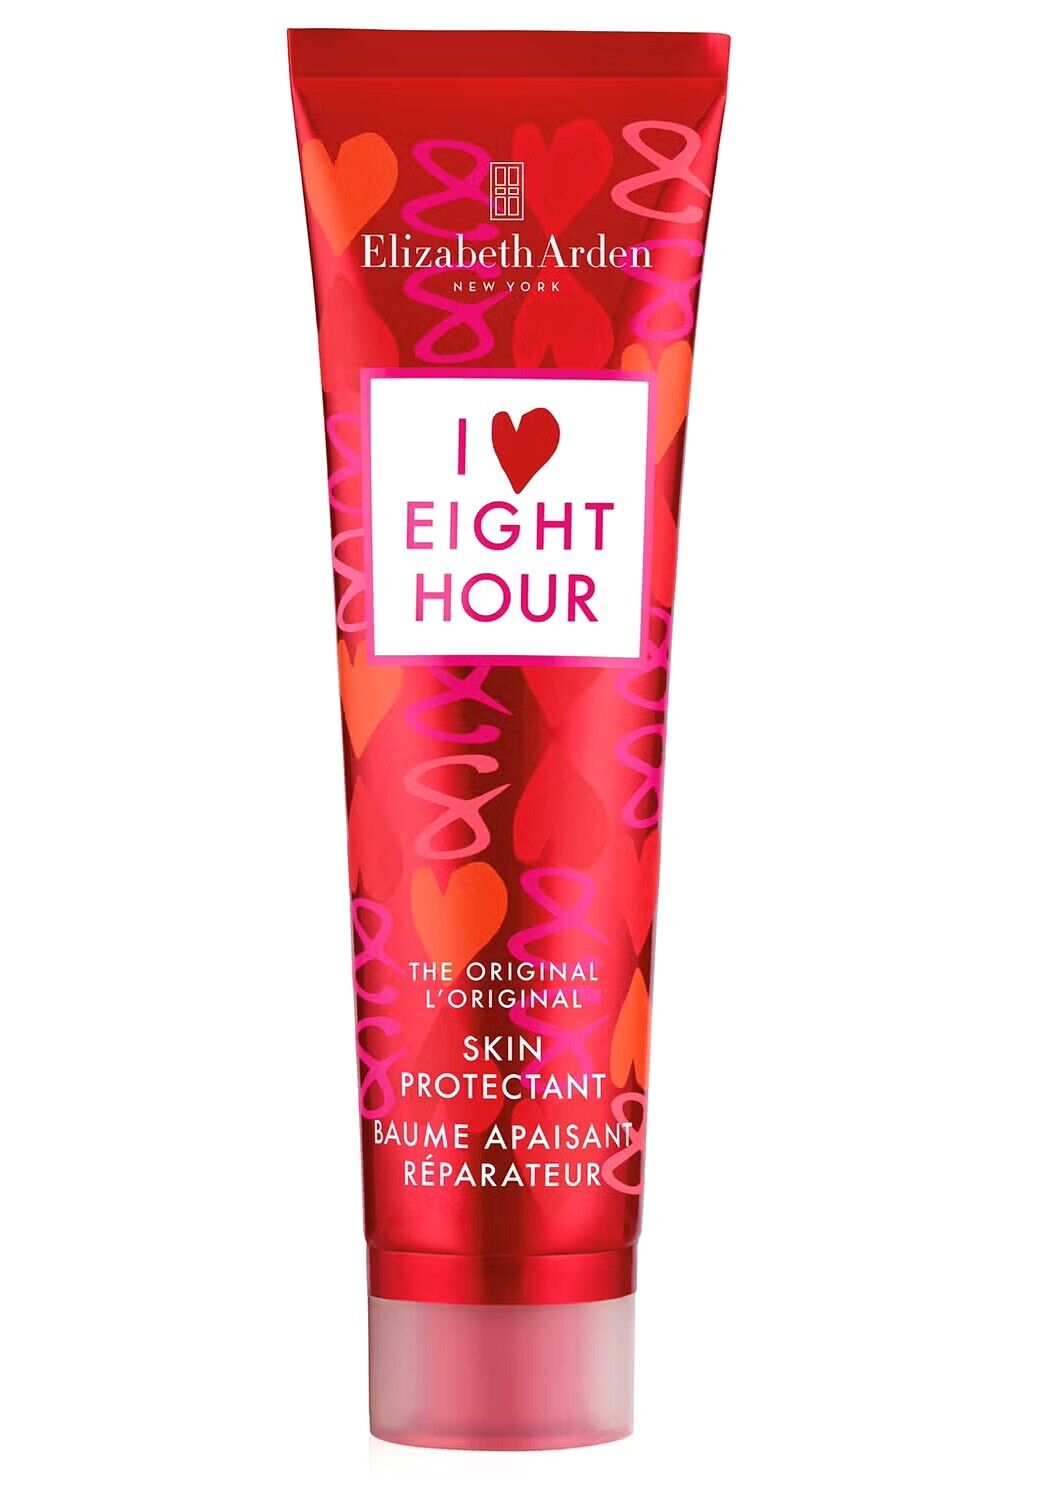 Elizabeth Arden I Love Eight Hour Cream Skin Protectant 1.7oz ASPICTURED Box Dam